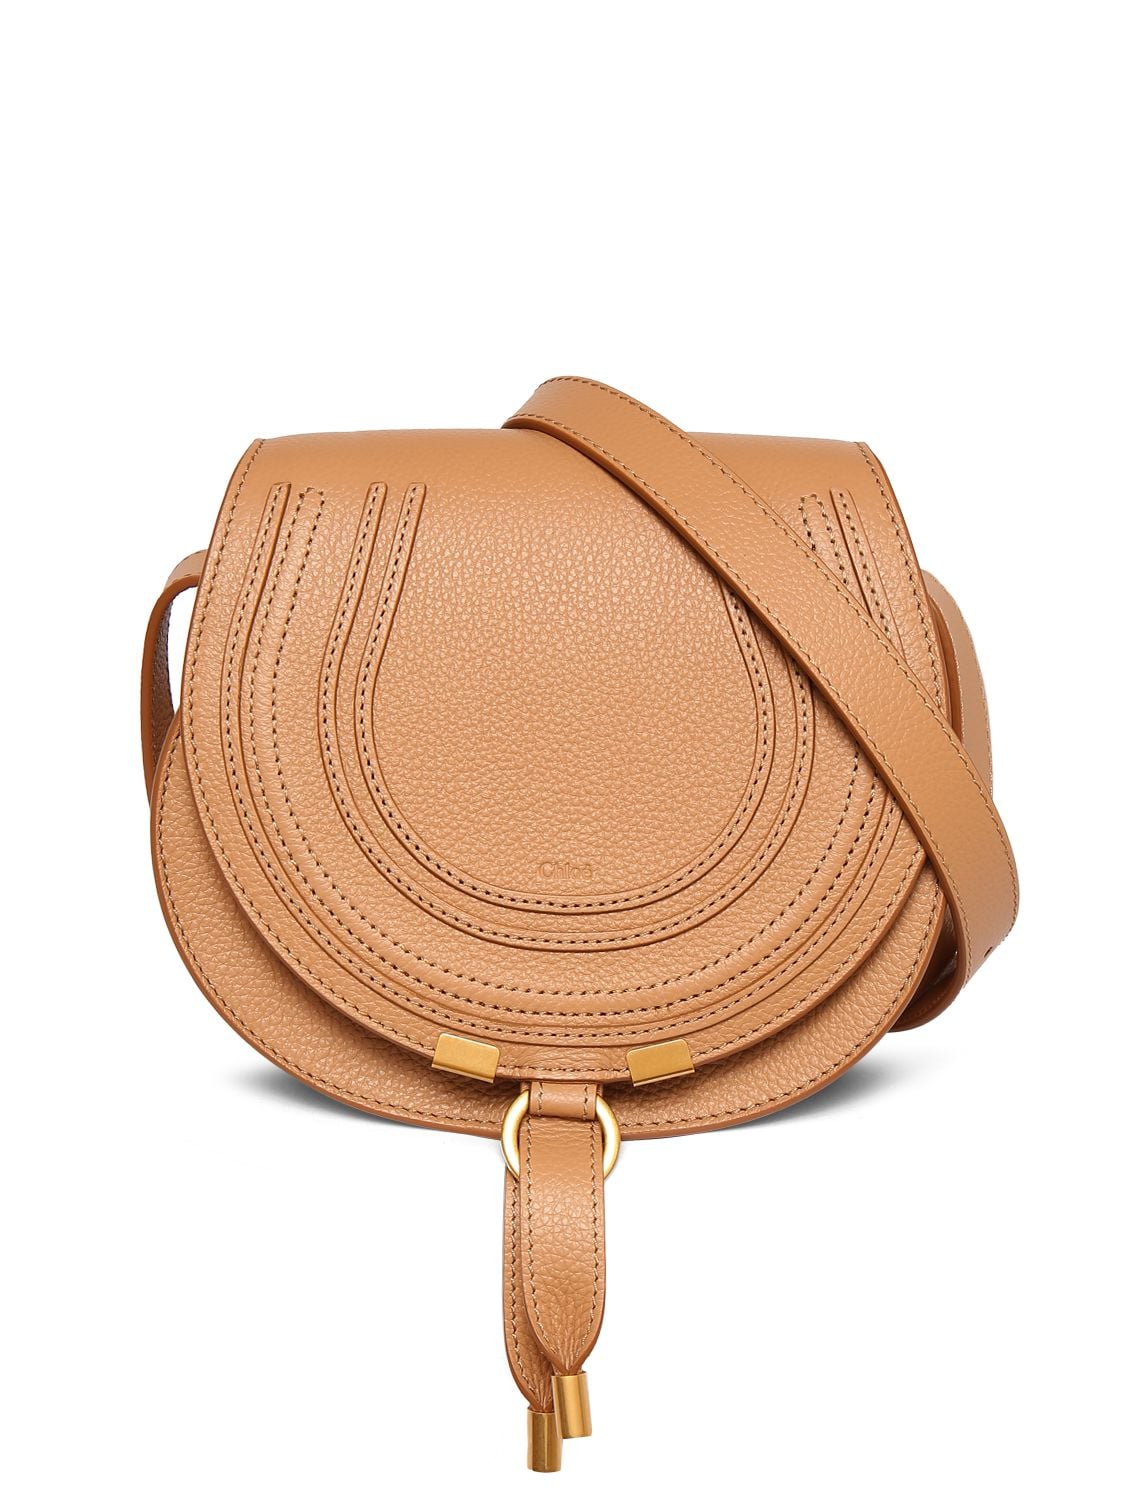 Chloé Mini Marcie Leather Shoulder Bag In Light Tan